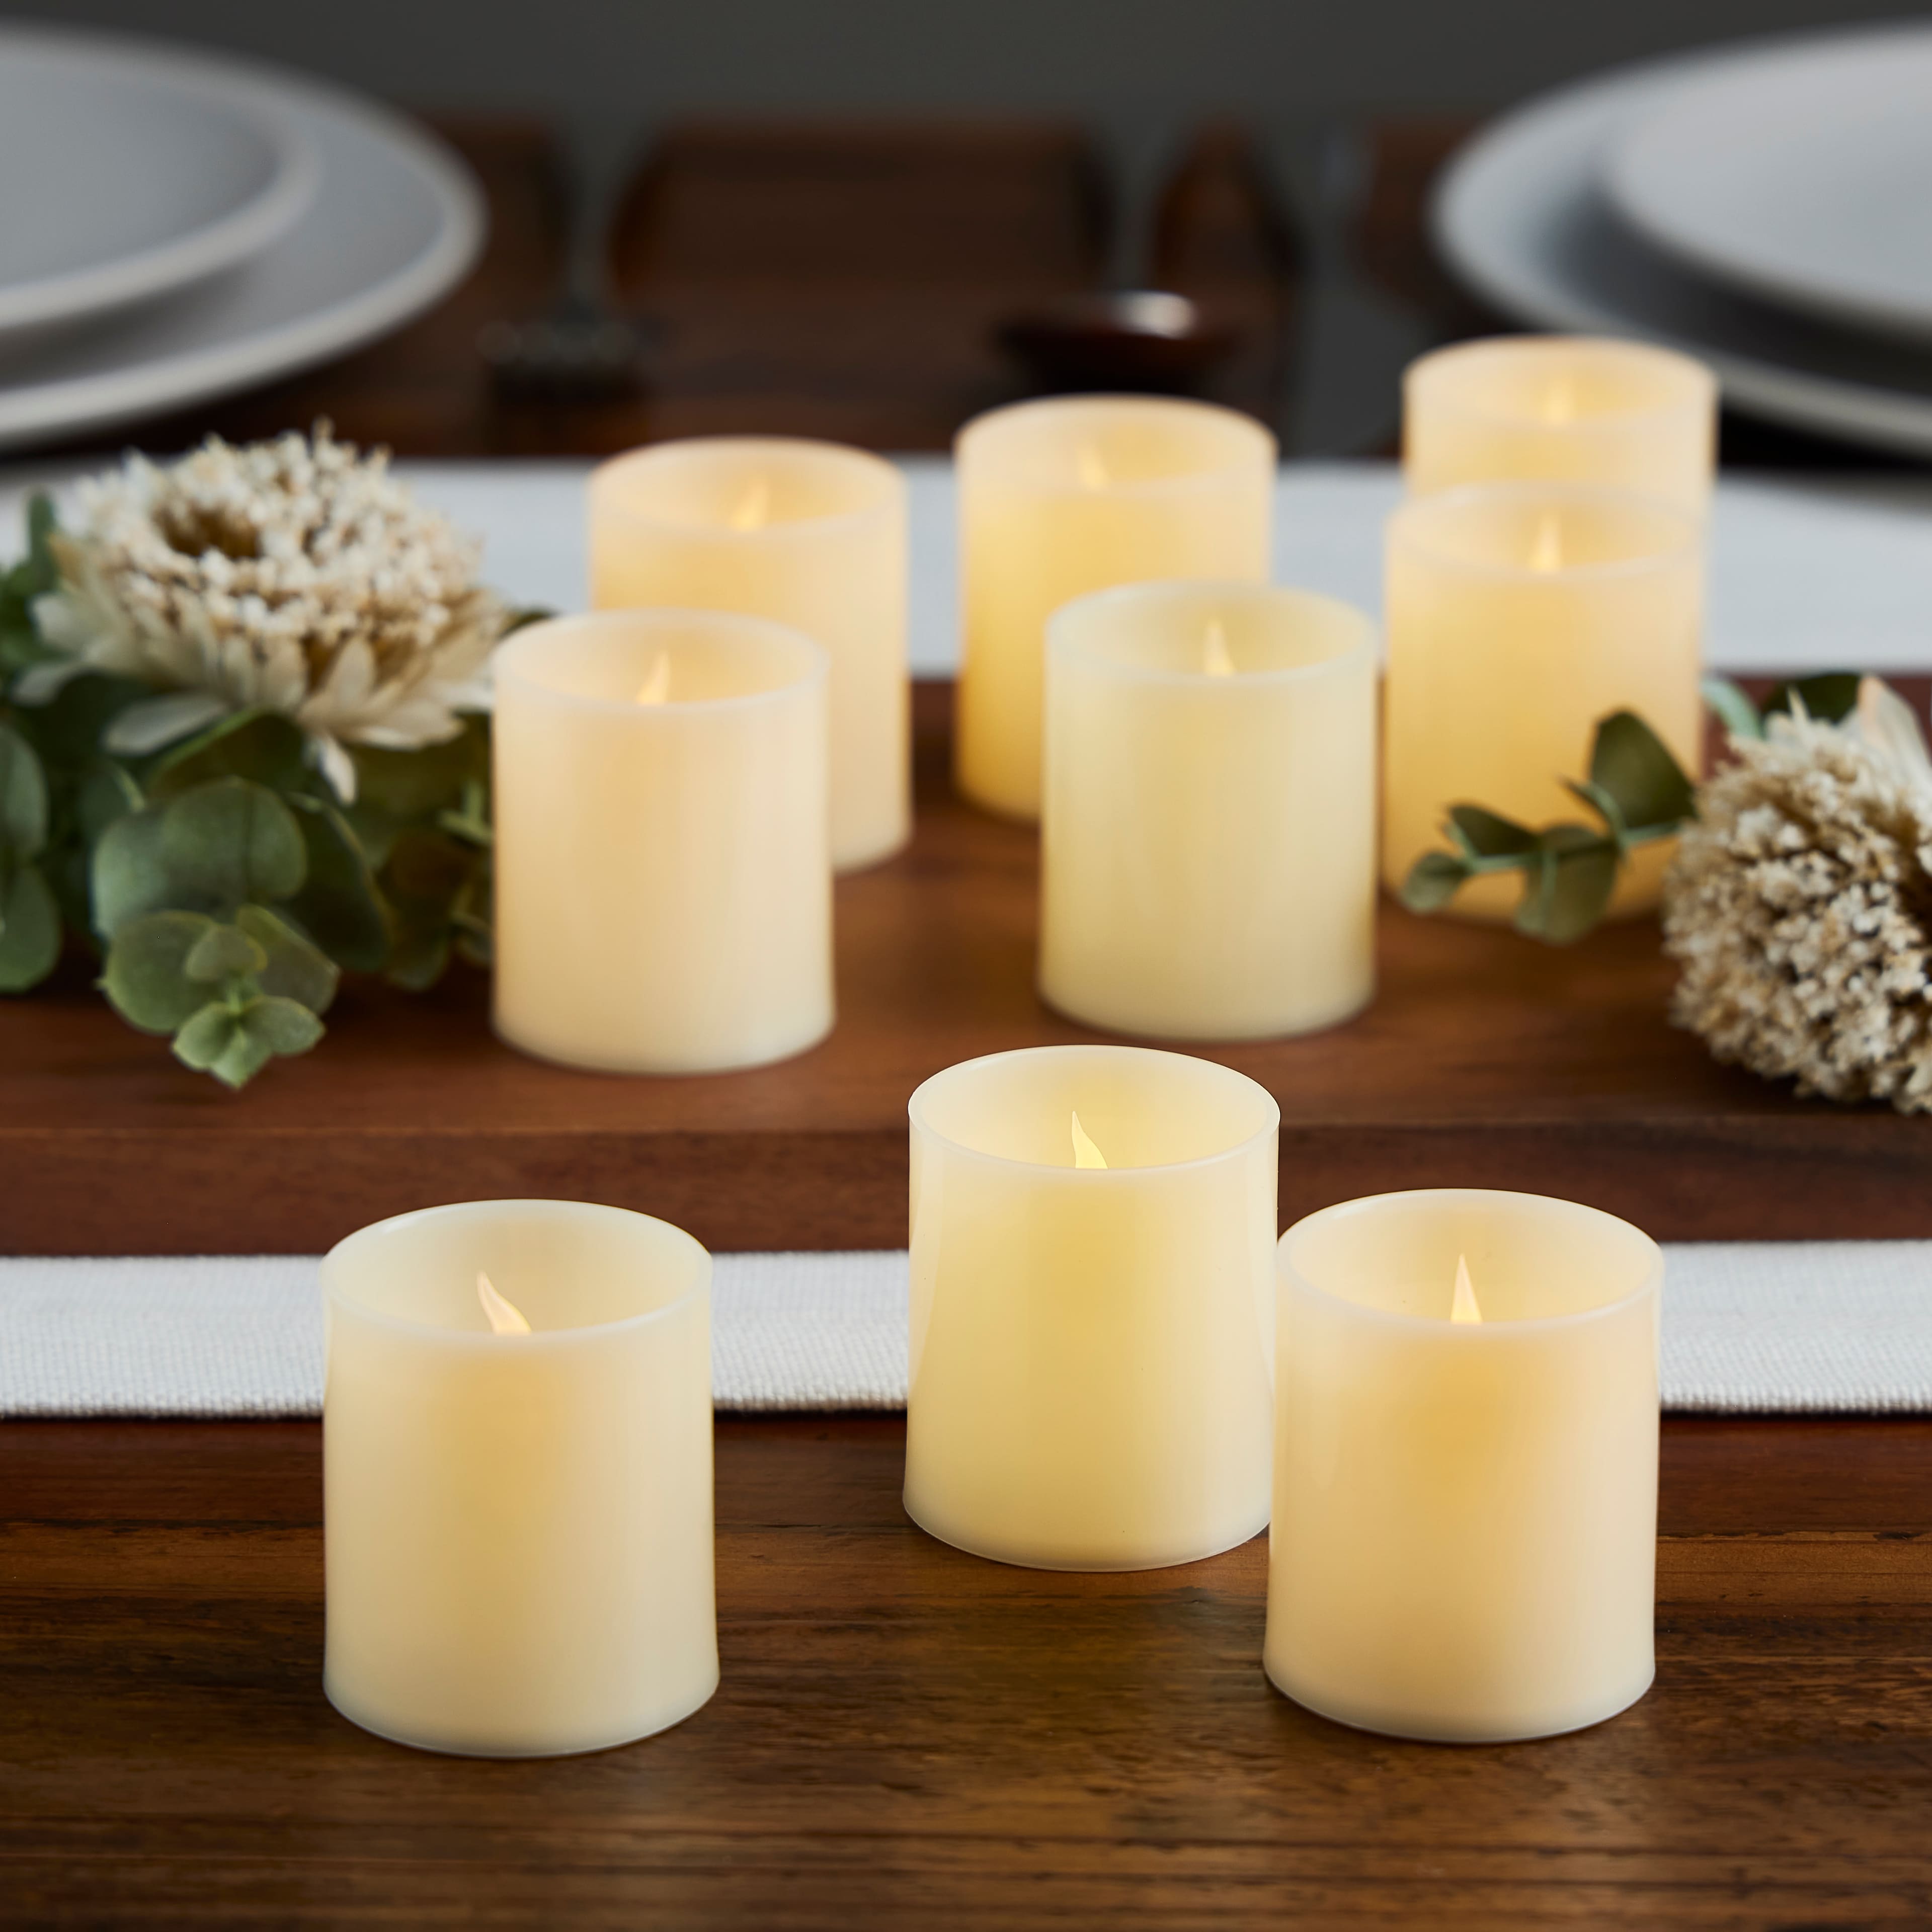 12 White Glass Votive Candles by Basic Elements 1.4 oz by Ashland